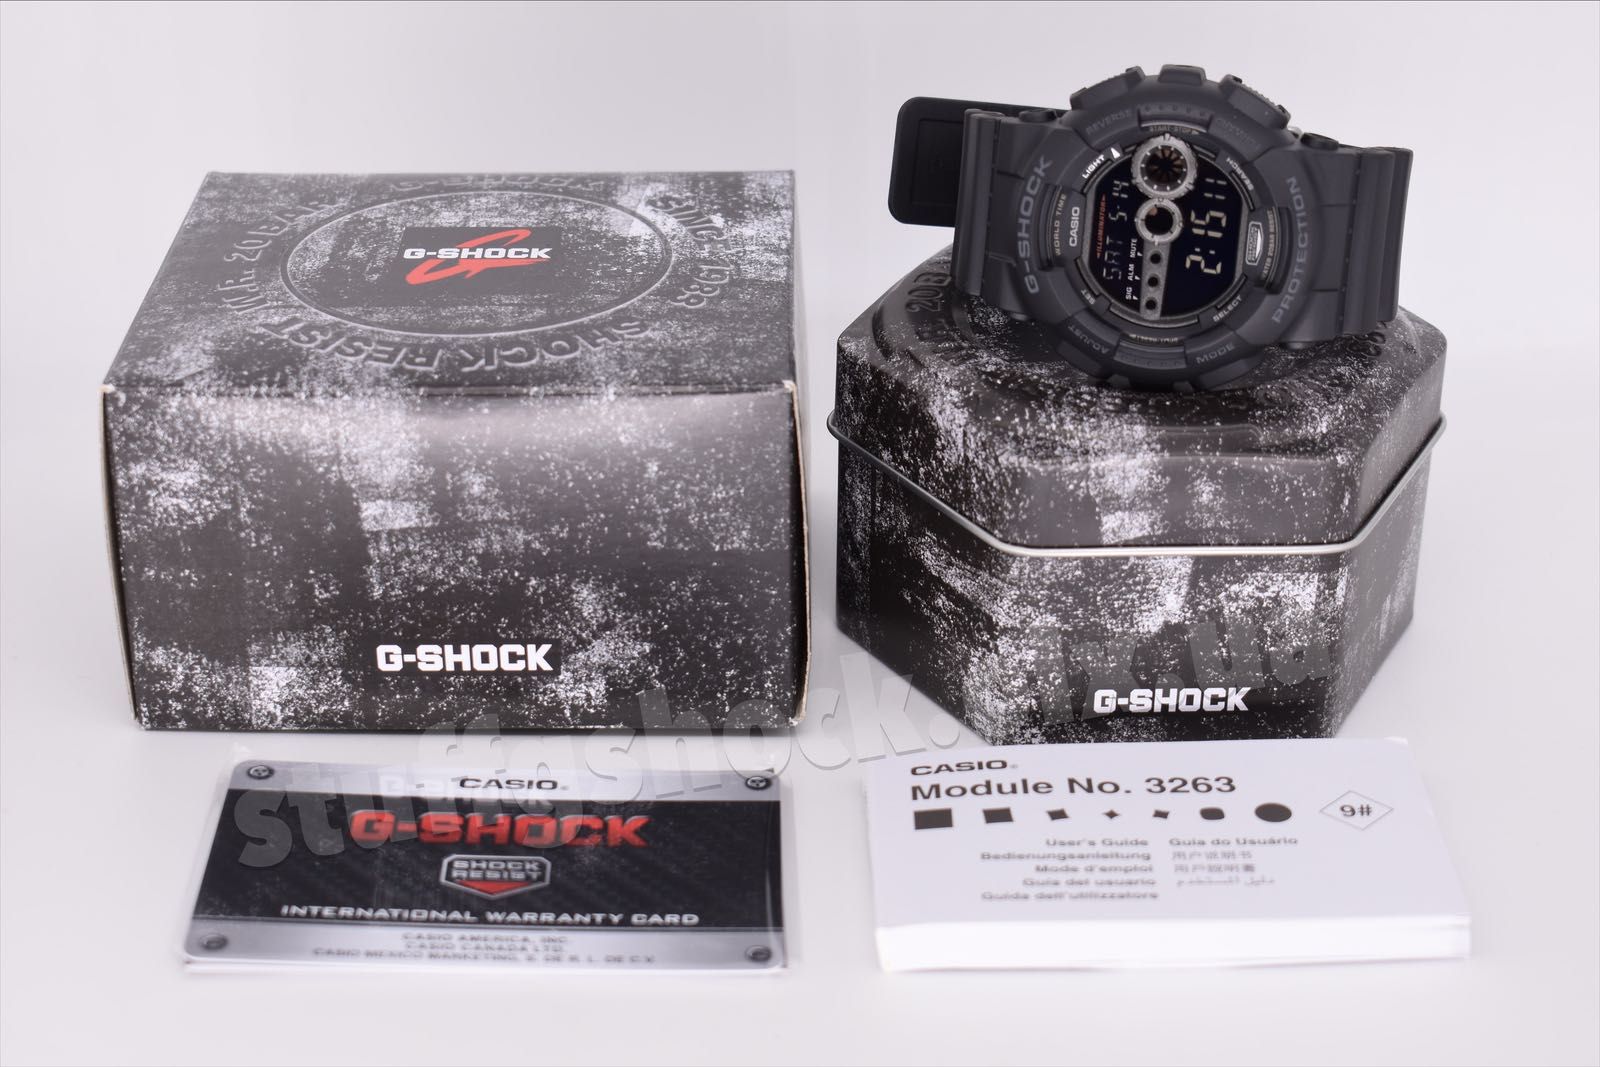 Casio G-Shock GD-100-1B NEW ORIGINAL!!!